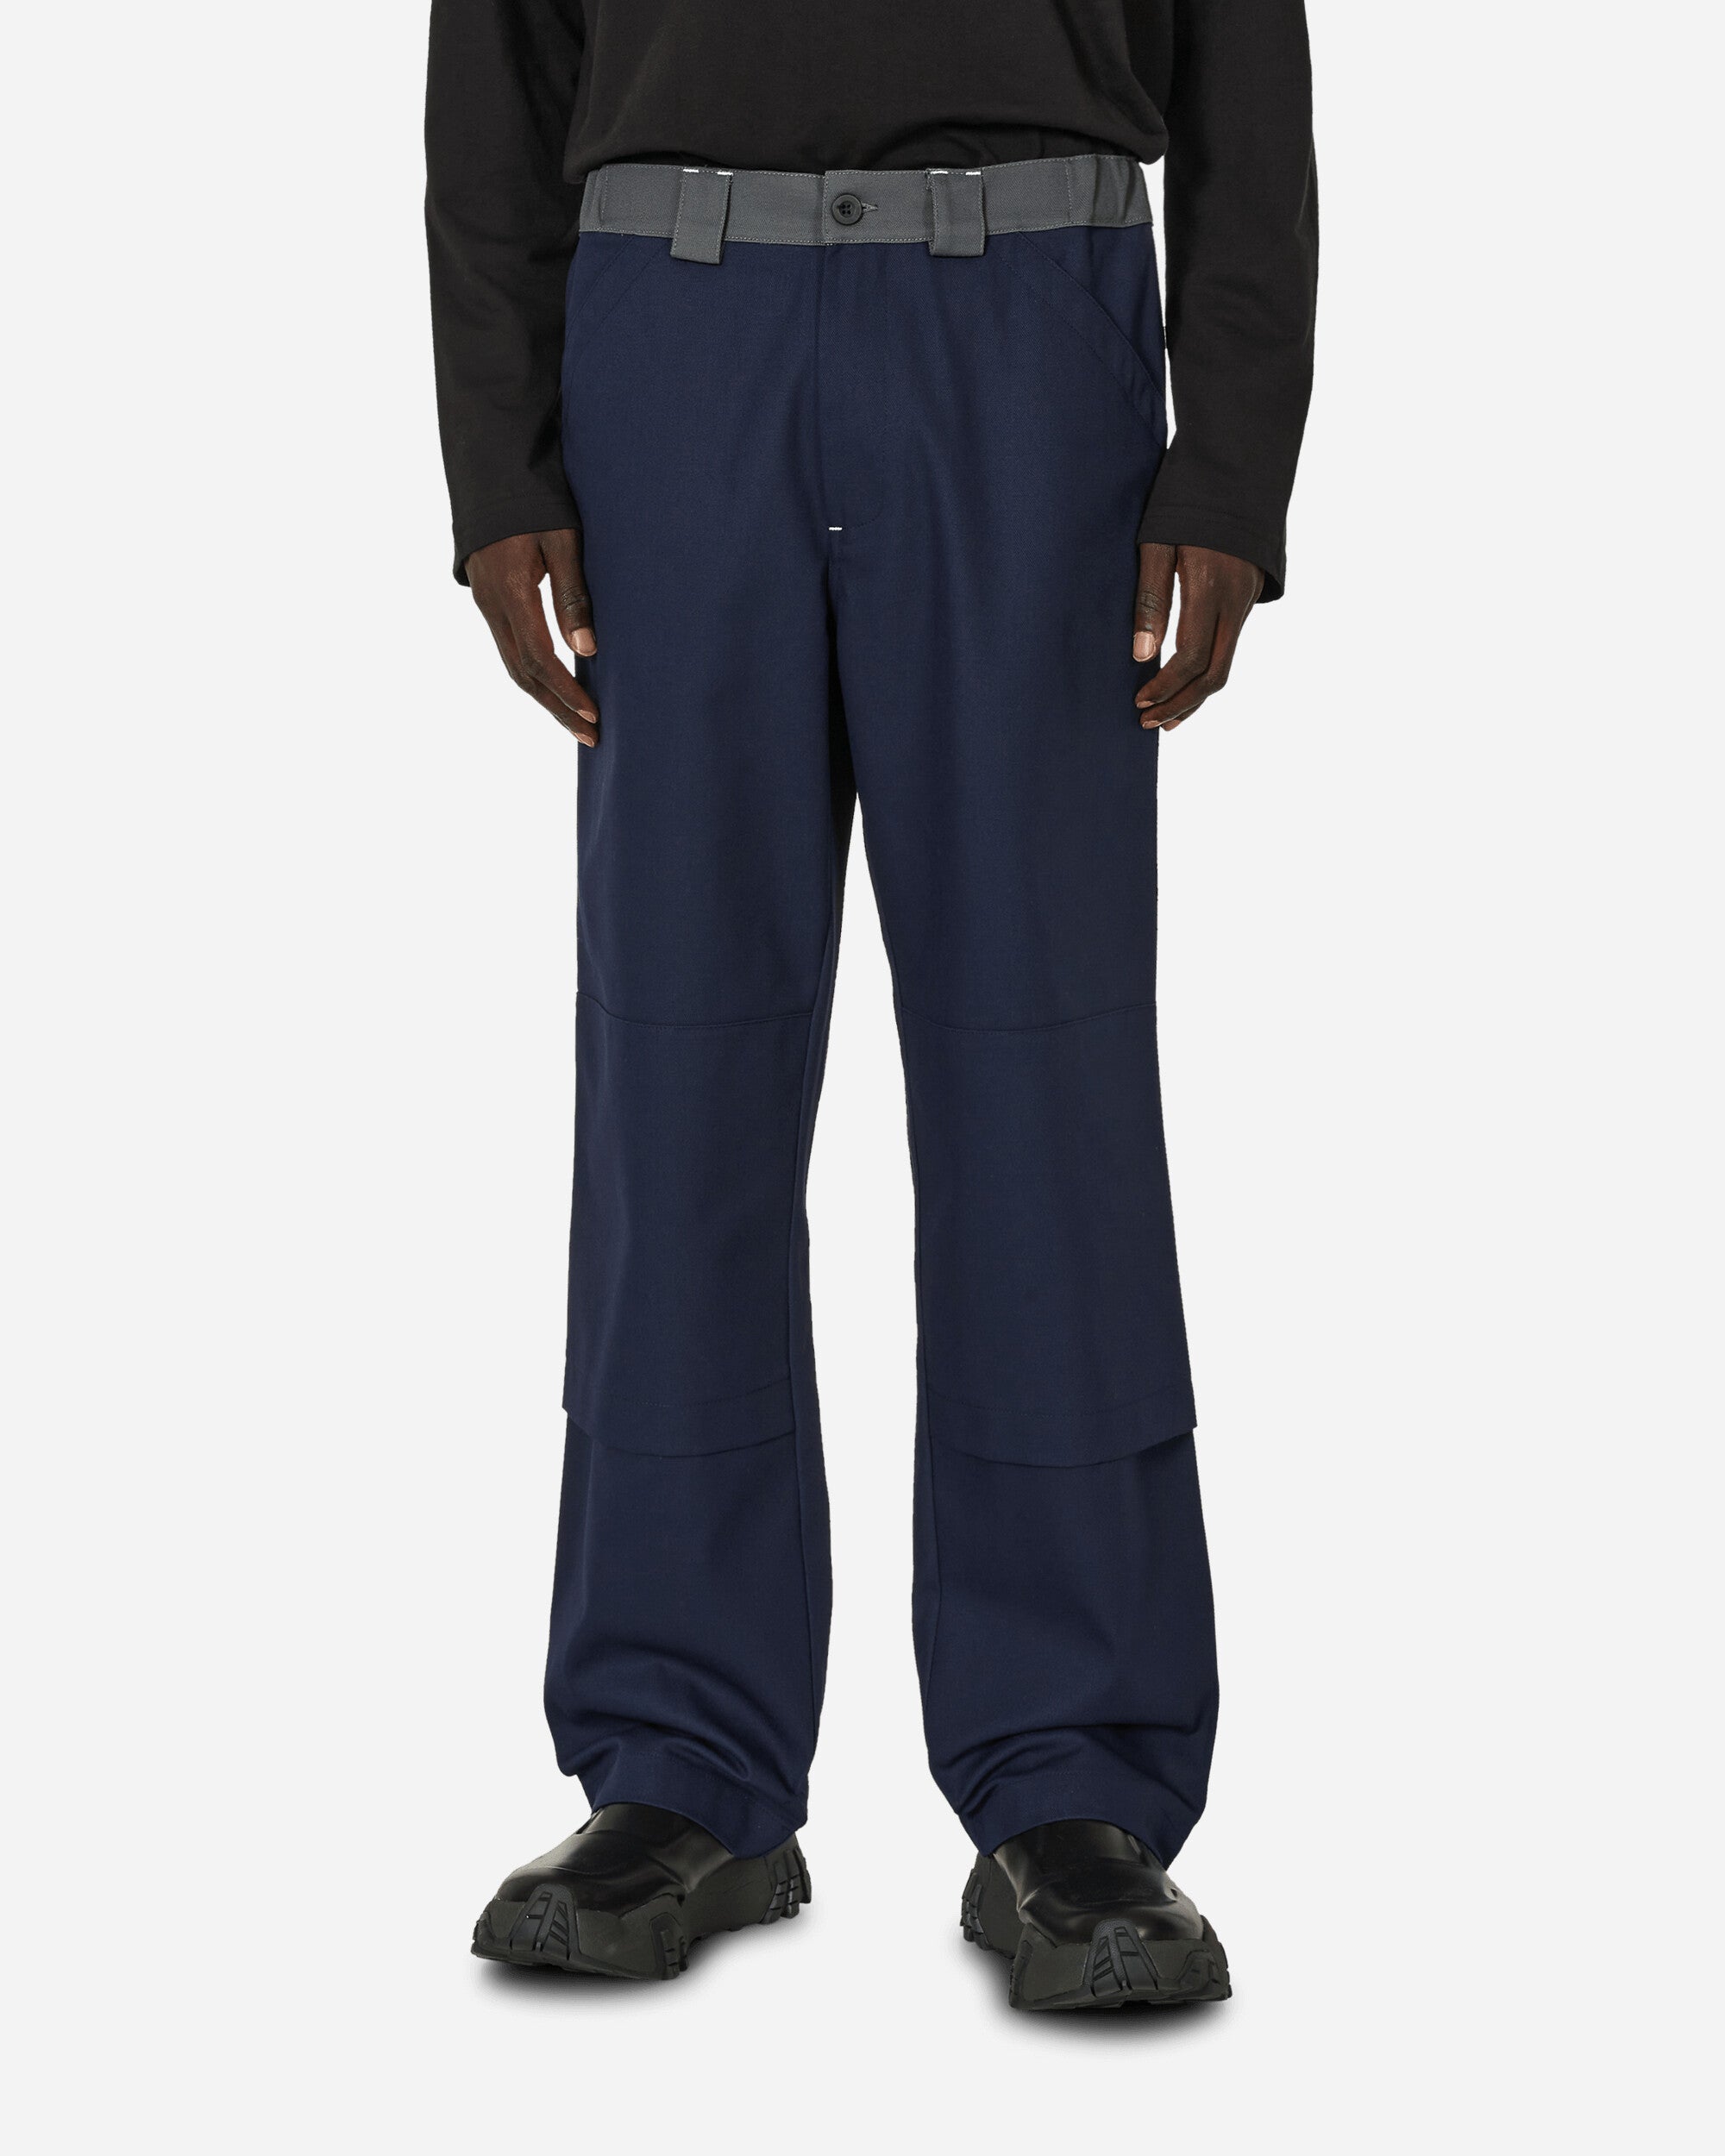 GR10K Replicated Klopman Pants X Slam Jam Blue Navy Pants Trousers AW23GRSJ1B1KG NY